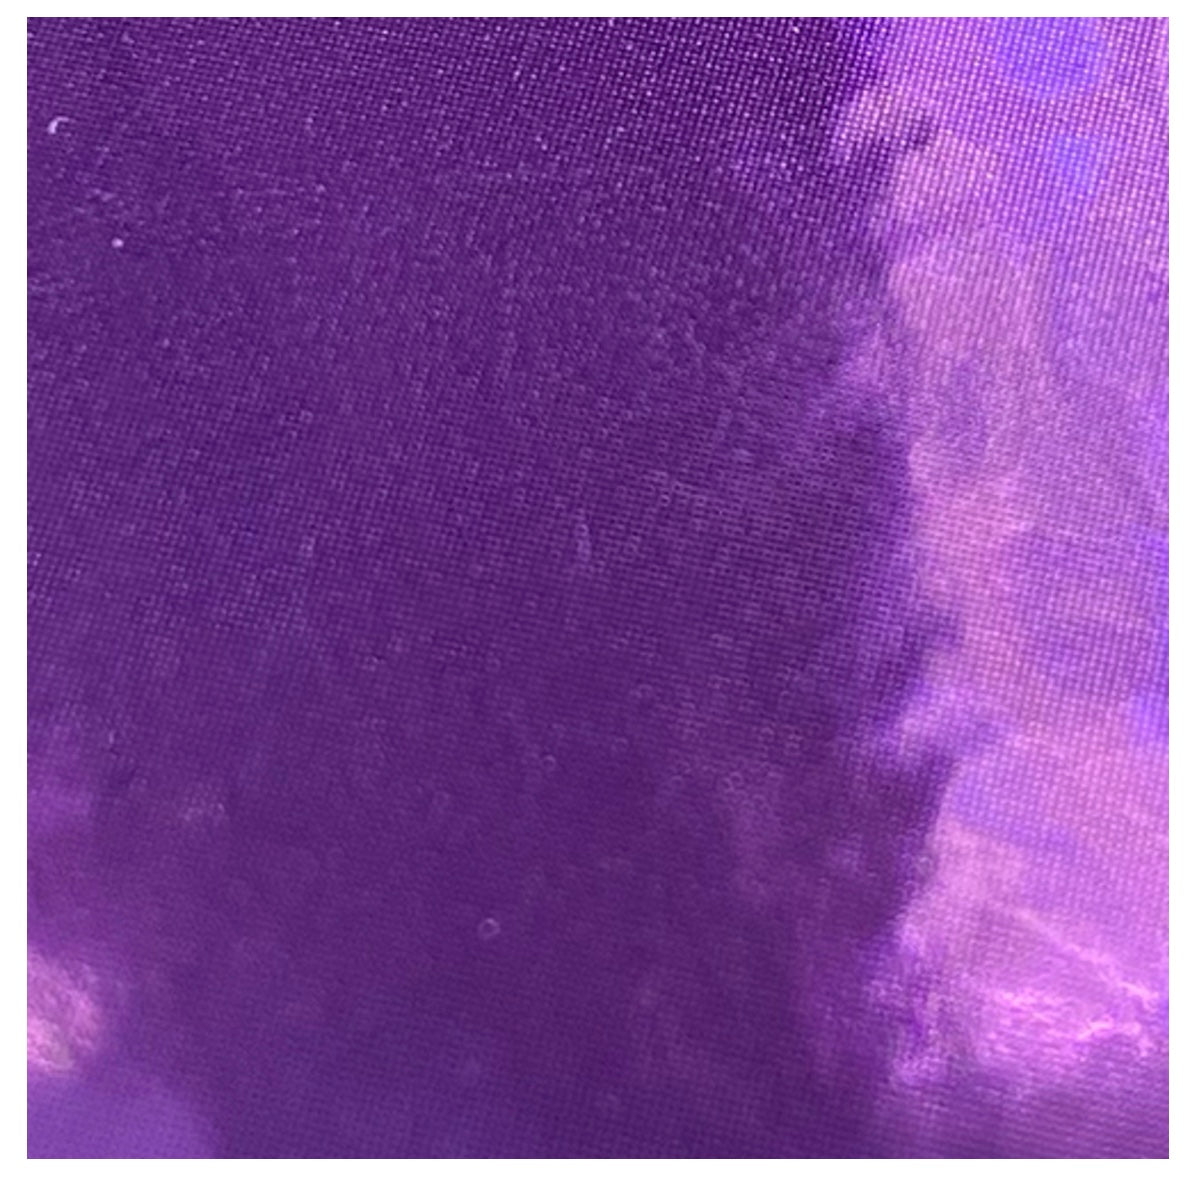 Pentart Colored Foil Sheets Dark Purple